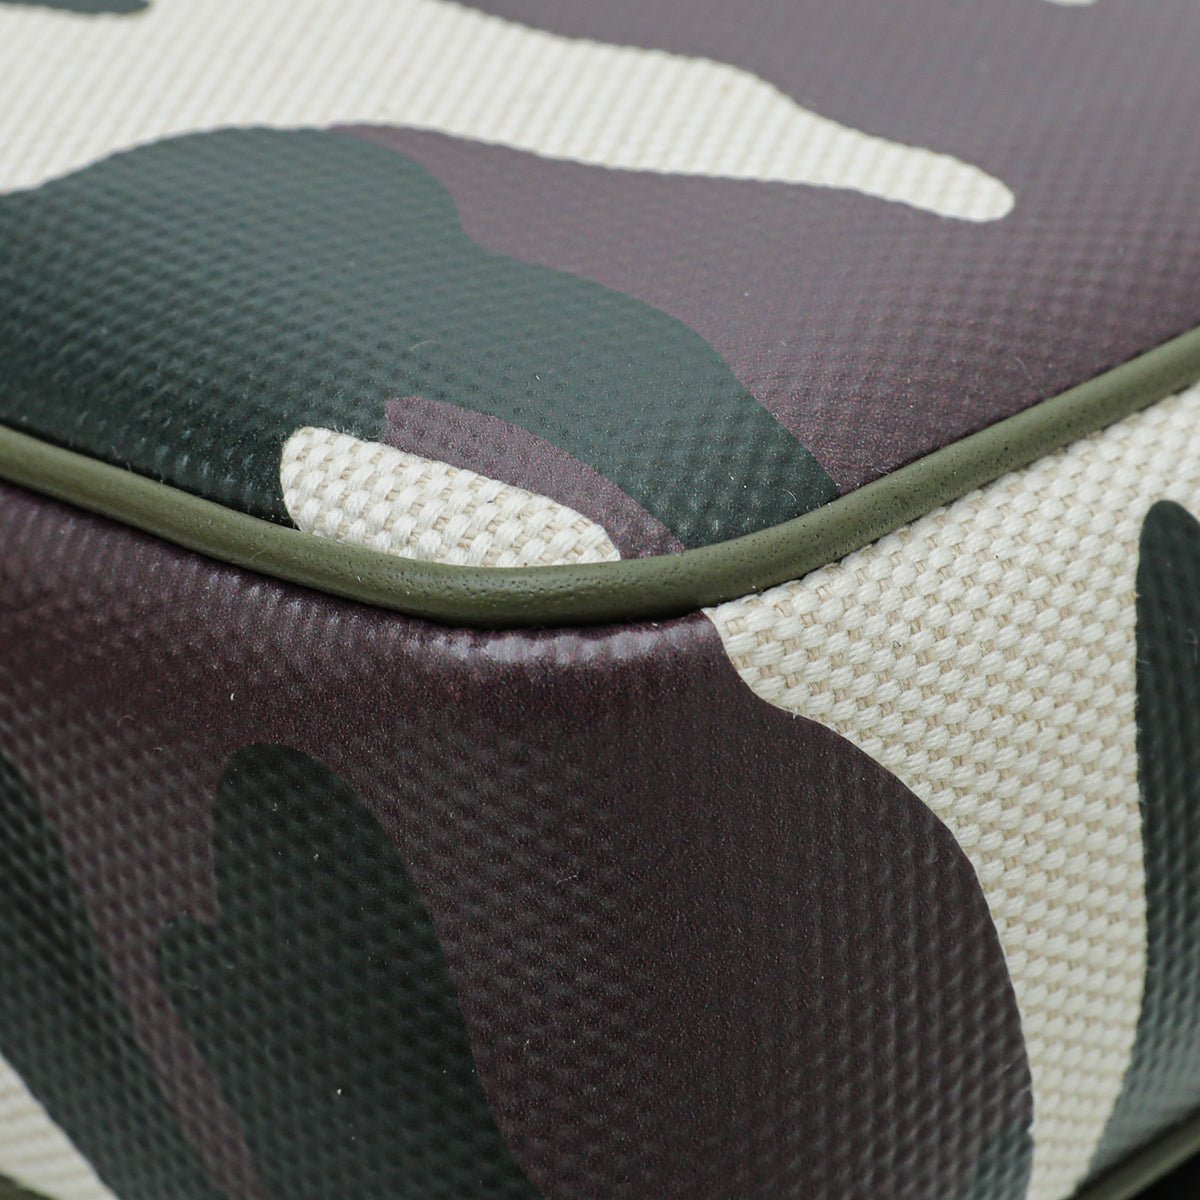 Burberry - Burberry Military Green Camou Lola Chain Bag | The Closet